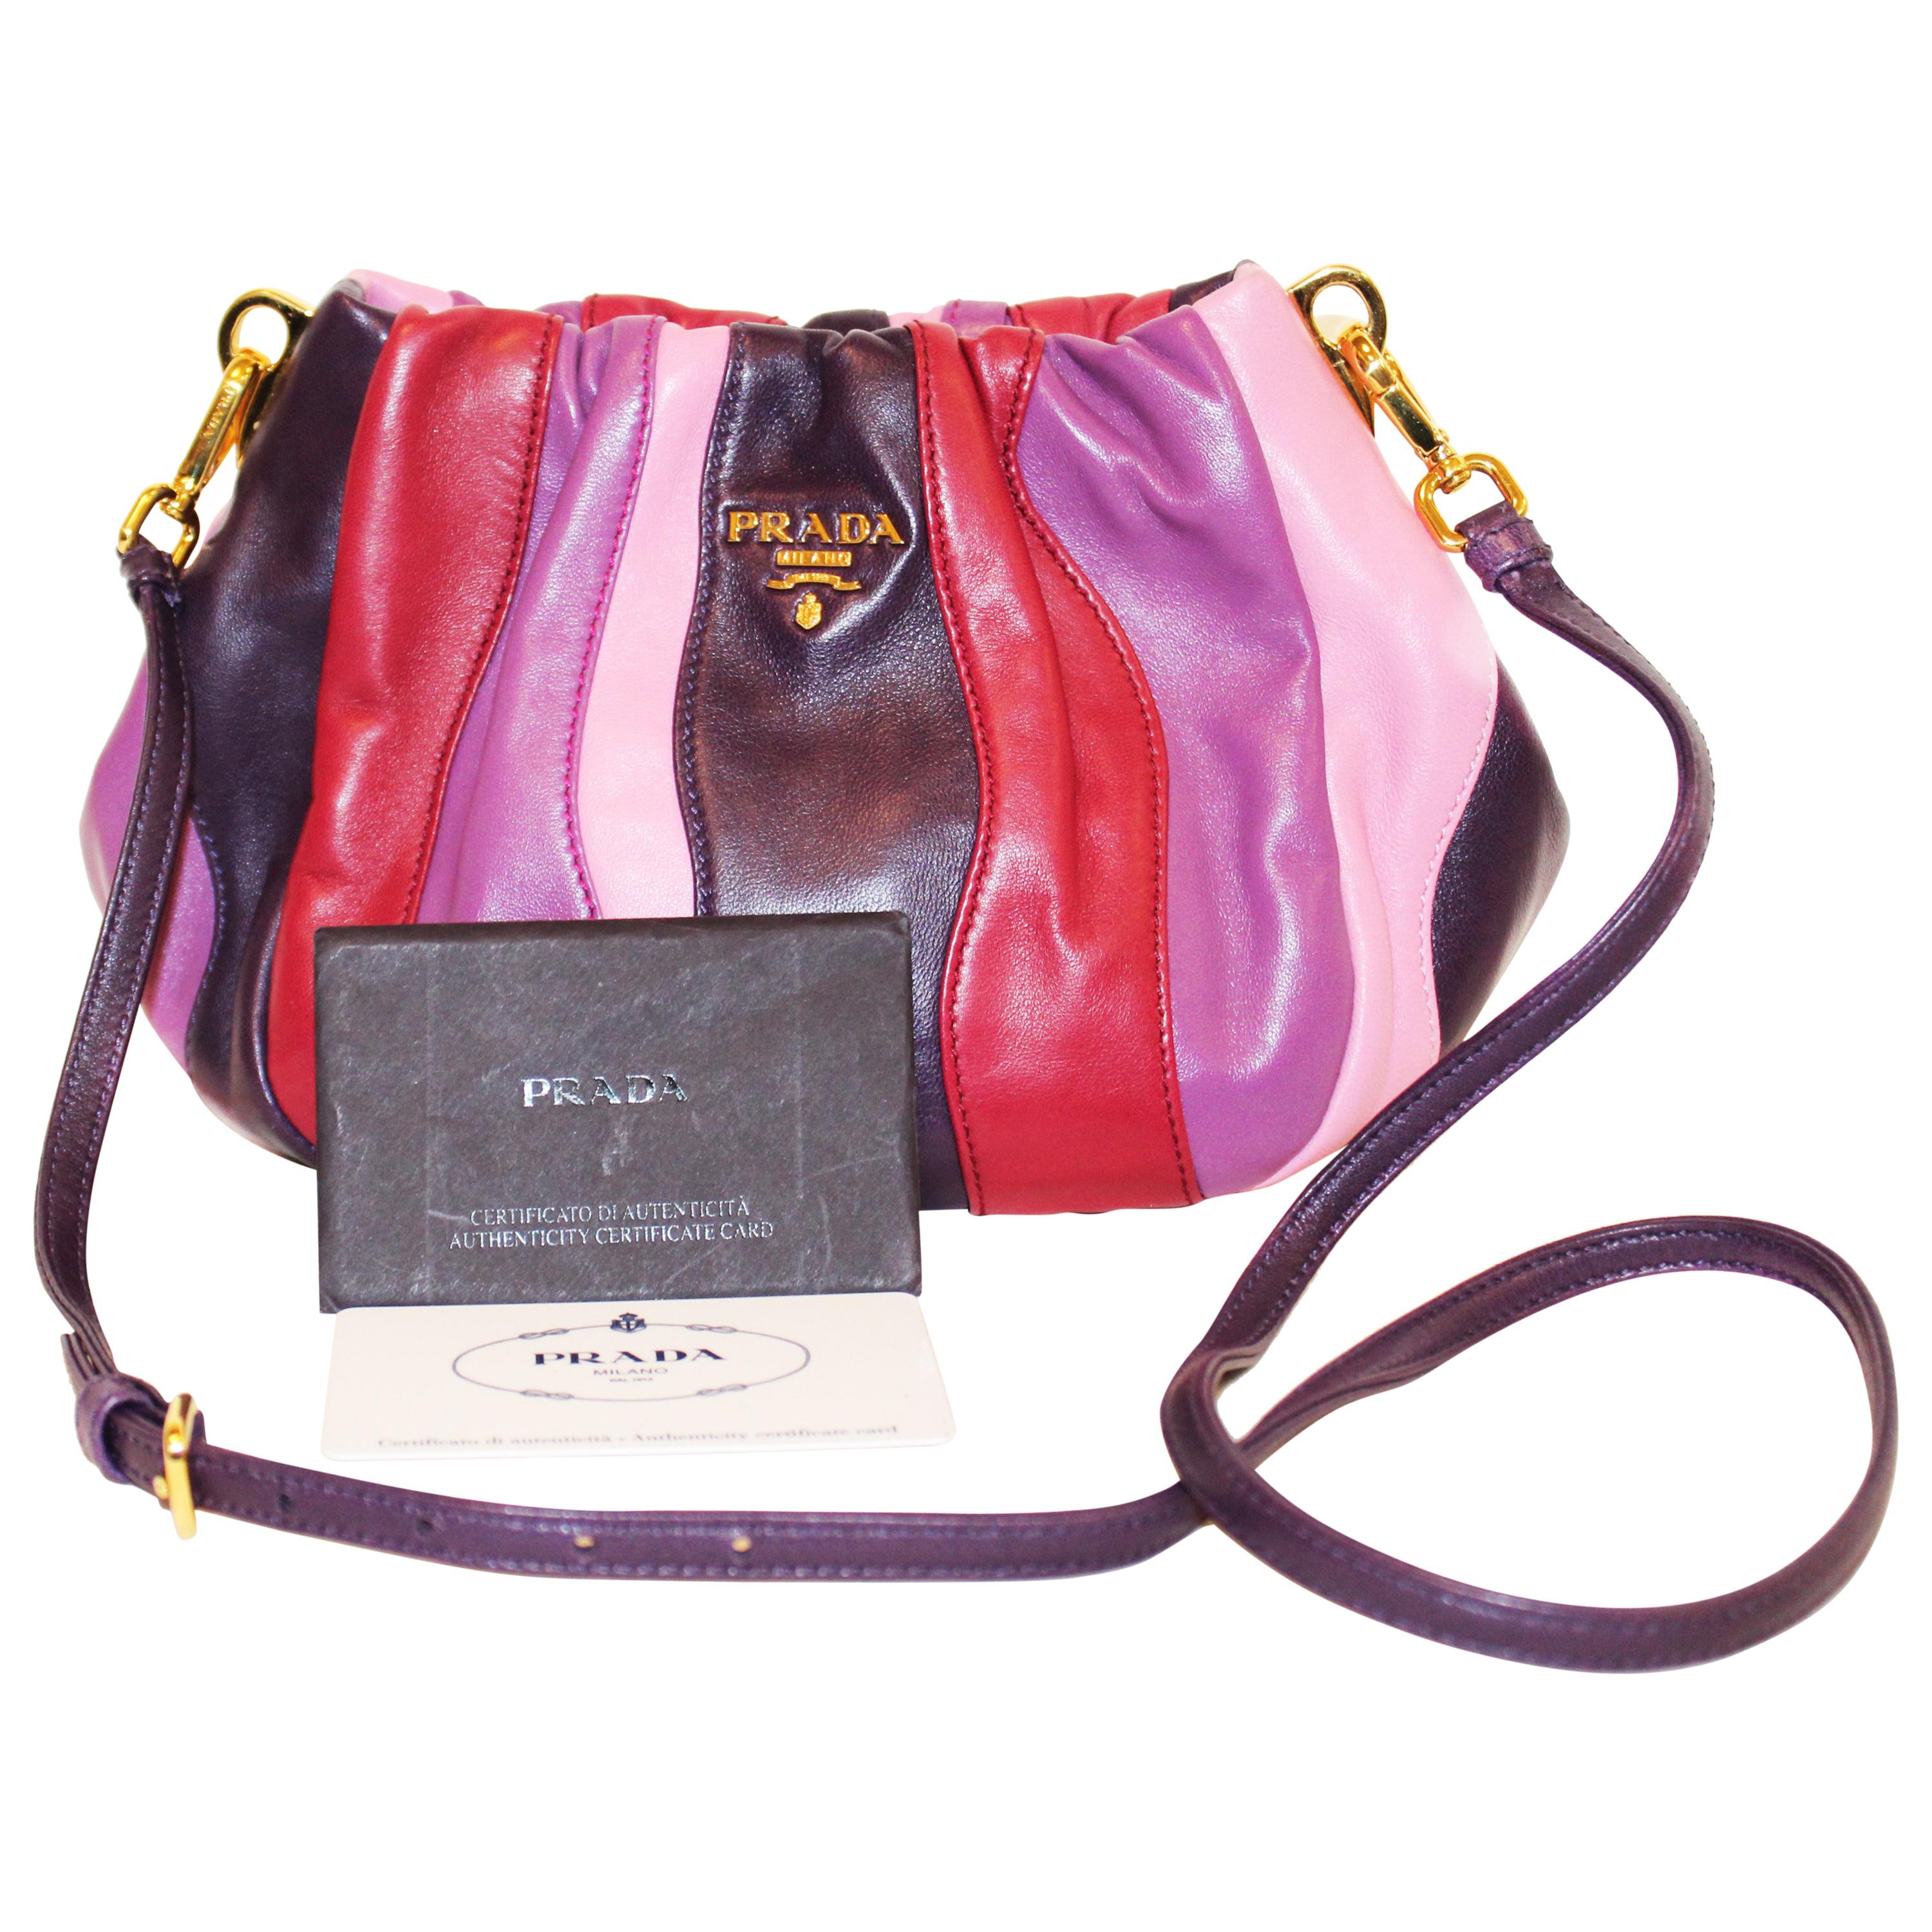 prada multicolour leather travel bag